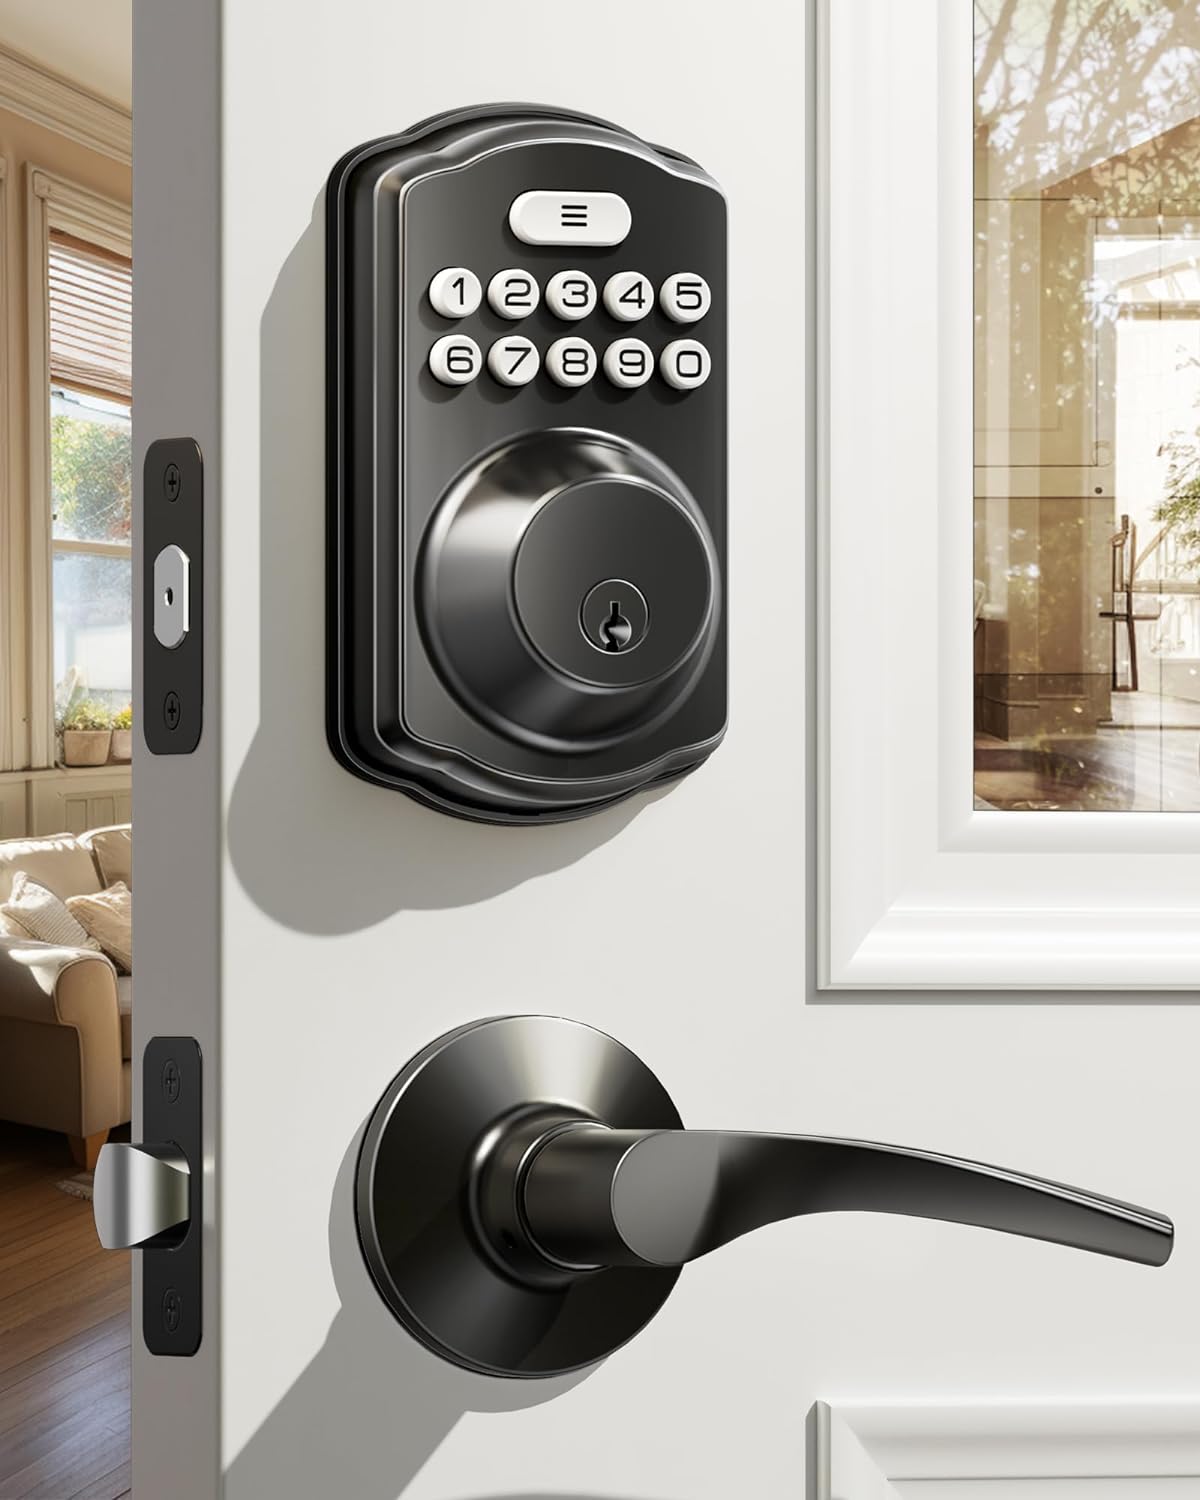 Veise KS01B Keyless Entry Door Lock with 2 Lever Handles - Electronic Keypad Deadbolt, Auto Lock, Easy Installation Digital Smart Code Door Lock, Front Door Lock Set